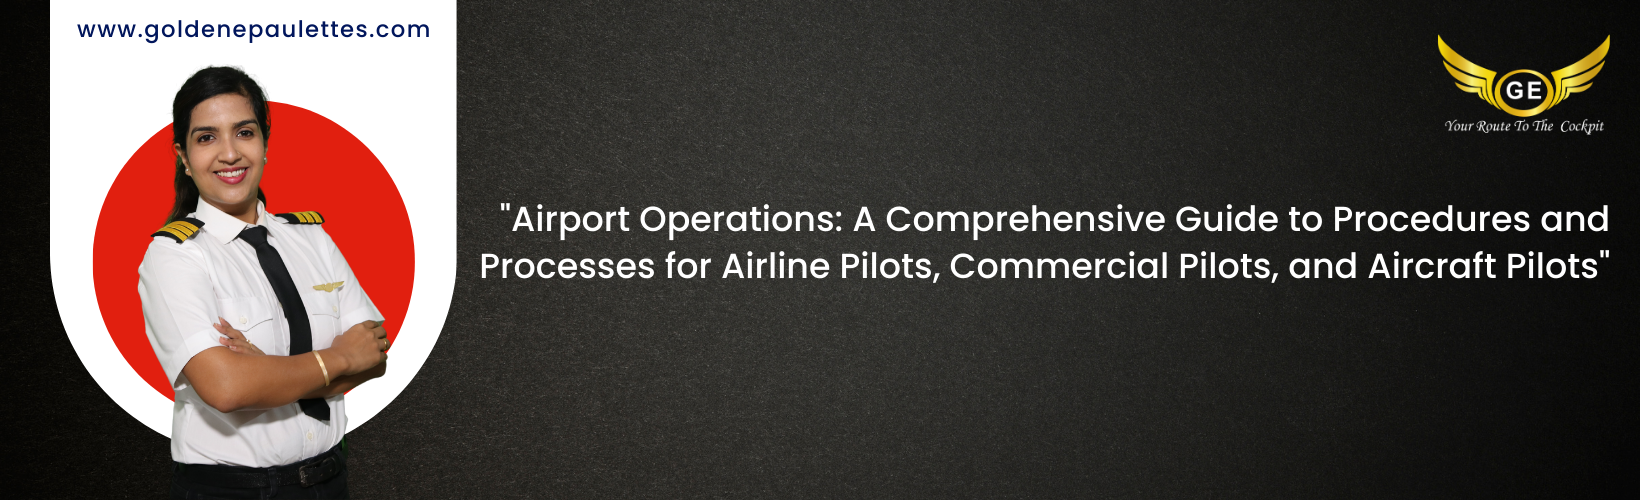 Flight Operations and Procedures